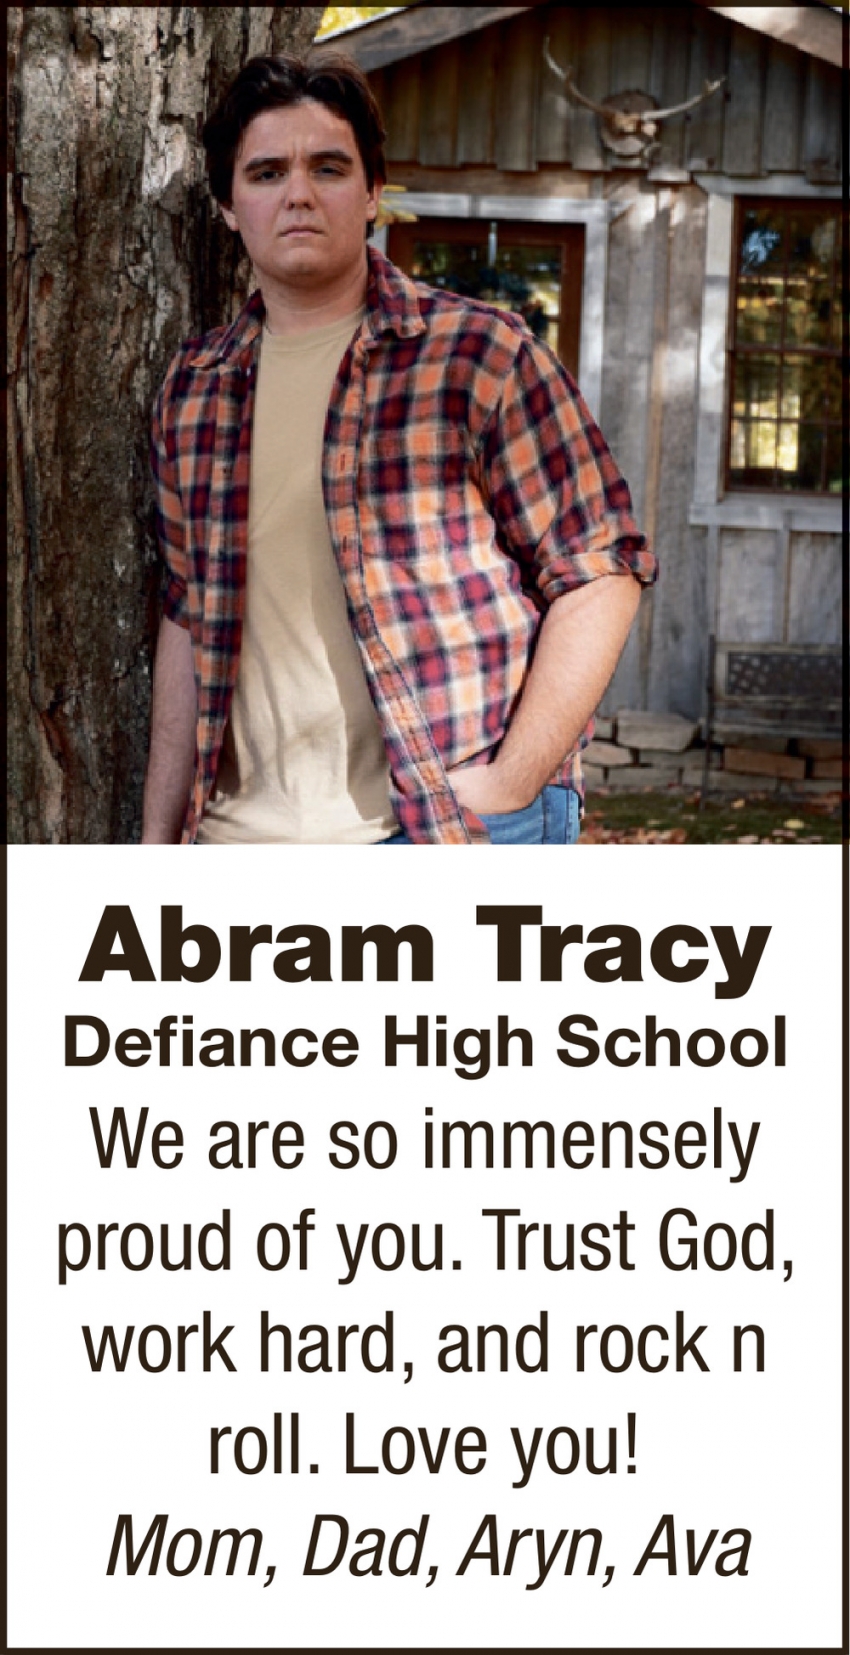 Abram Tracy